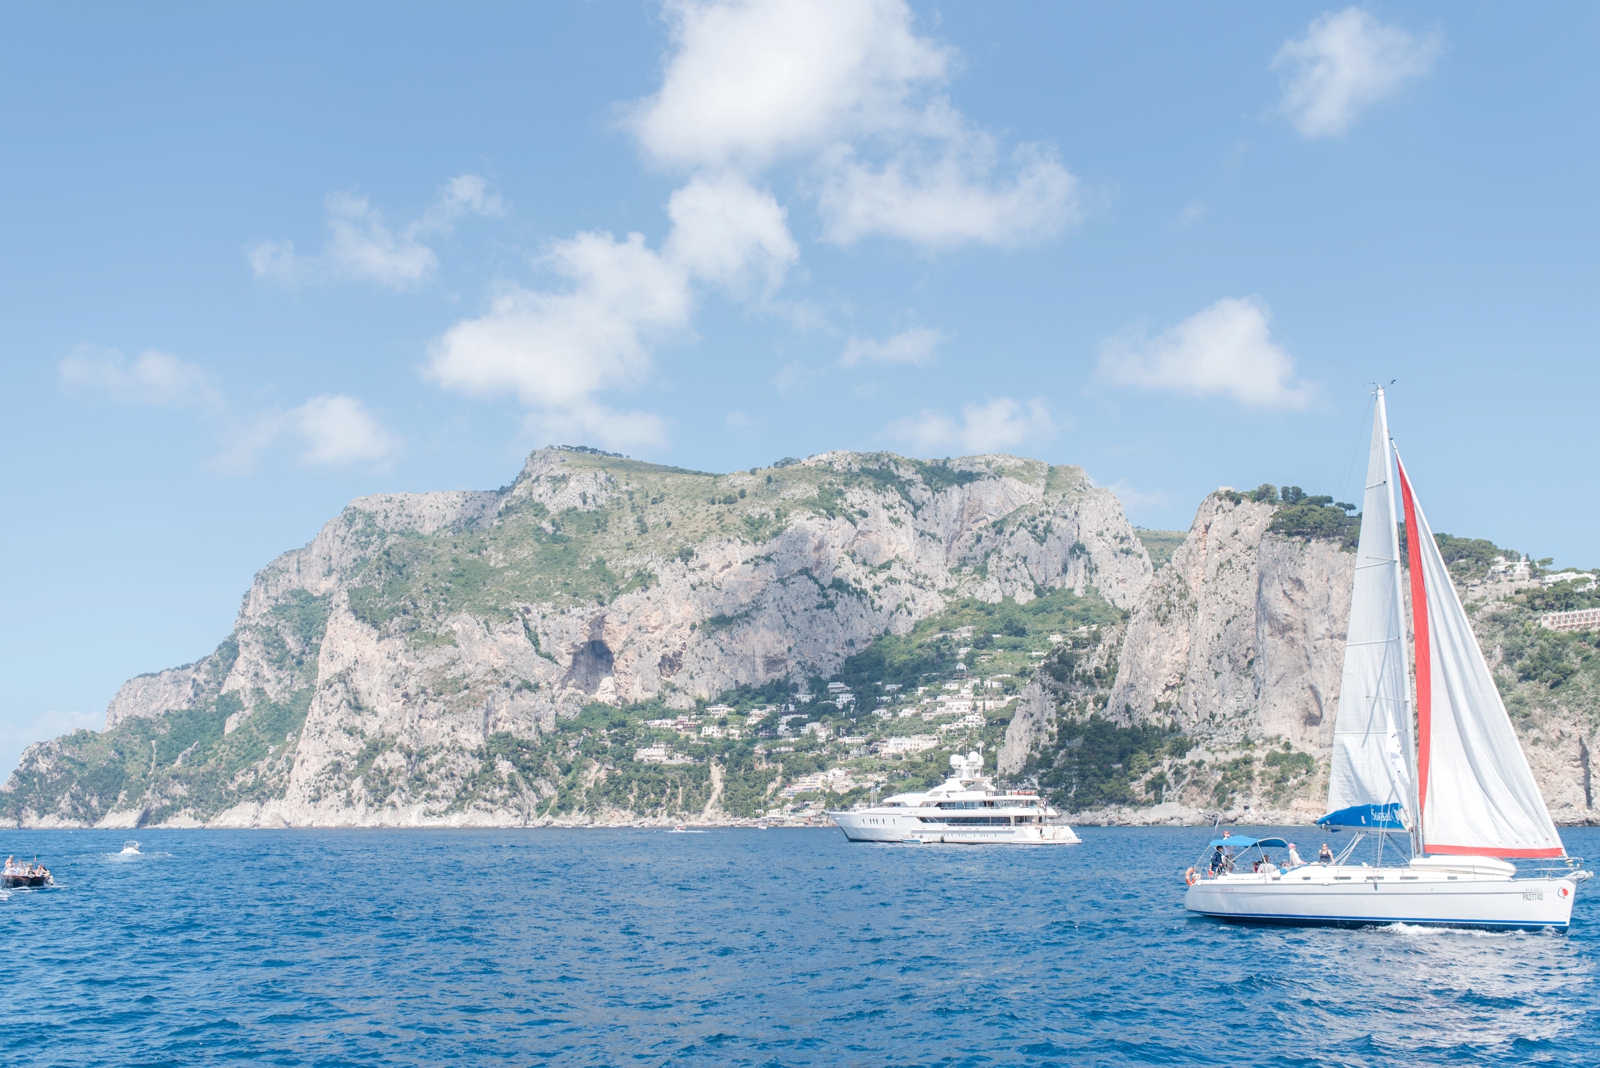 capri-italy-amalfi-coast-via-mediterranean-cruise-carnival-vista-photo_5567.jpg